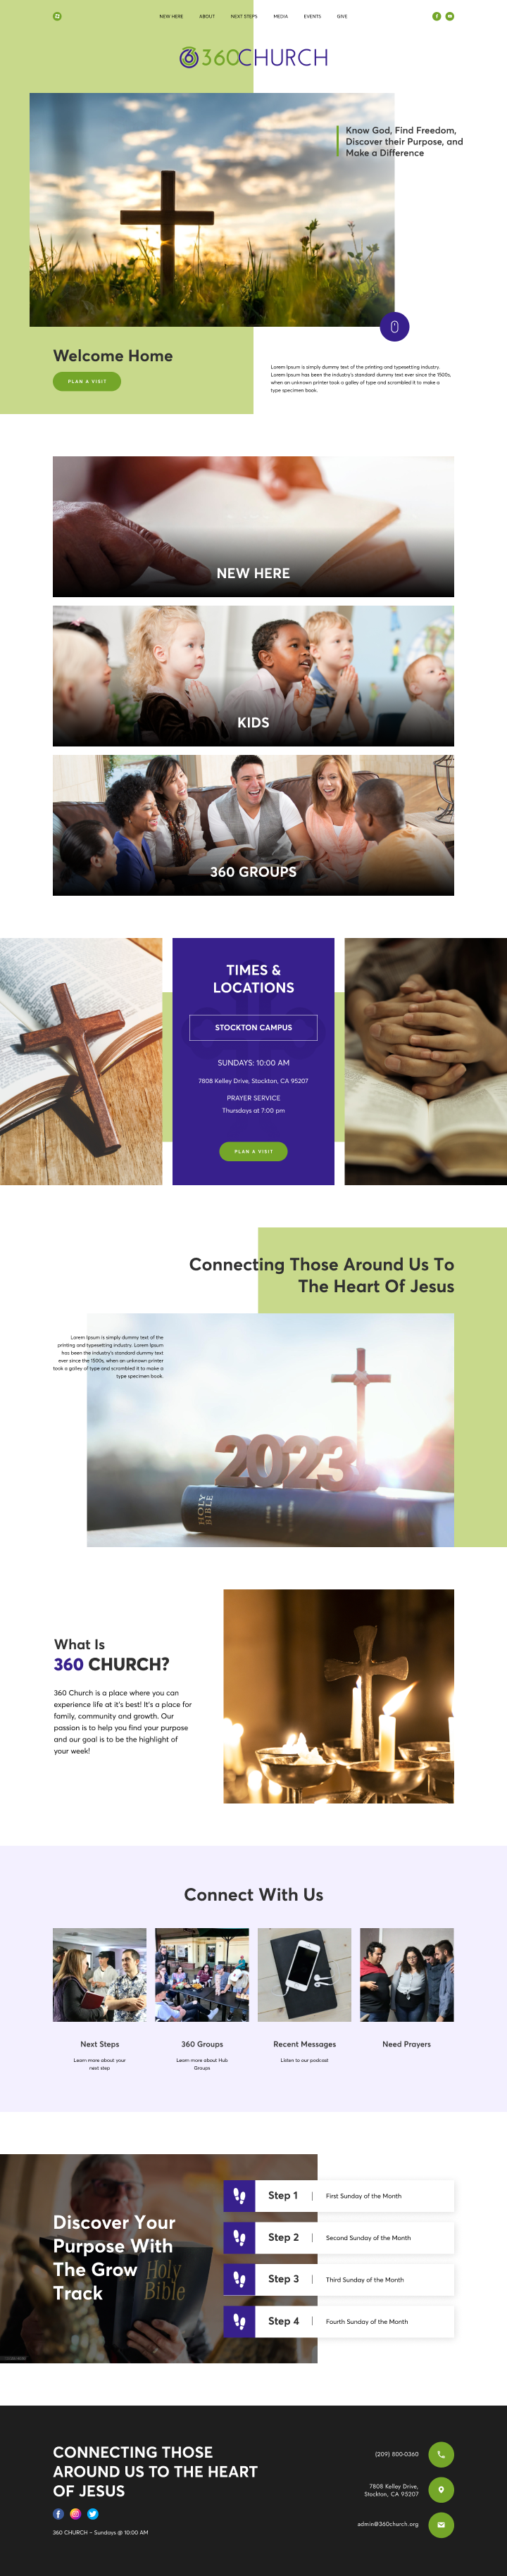 Church website design example